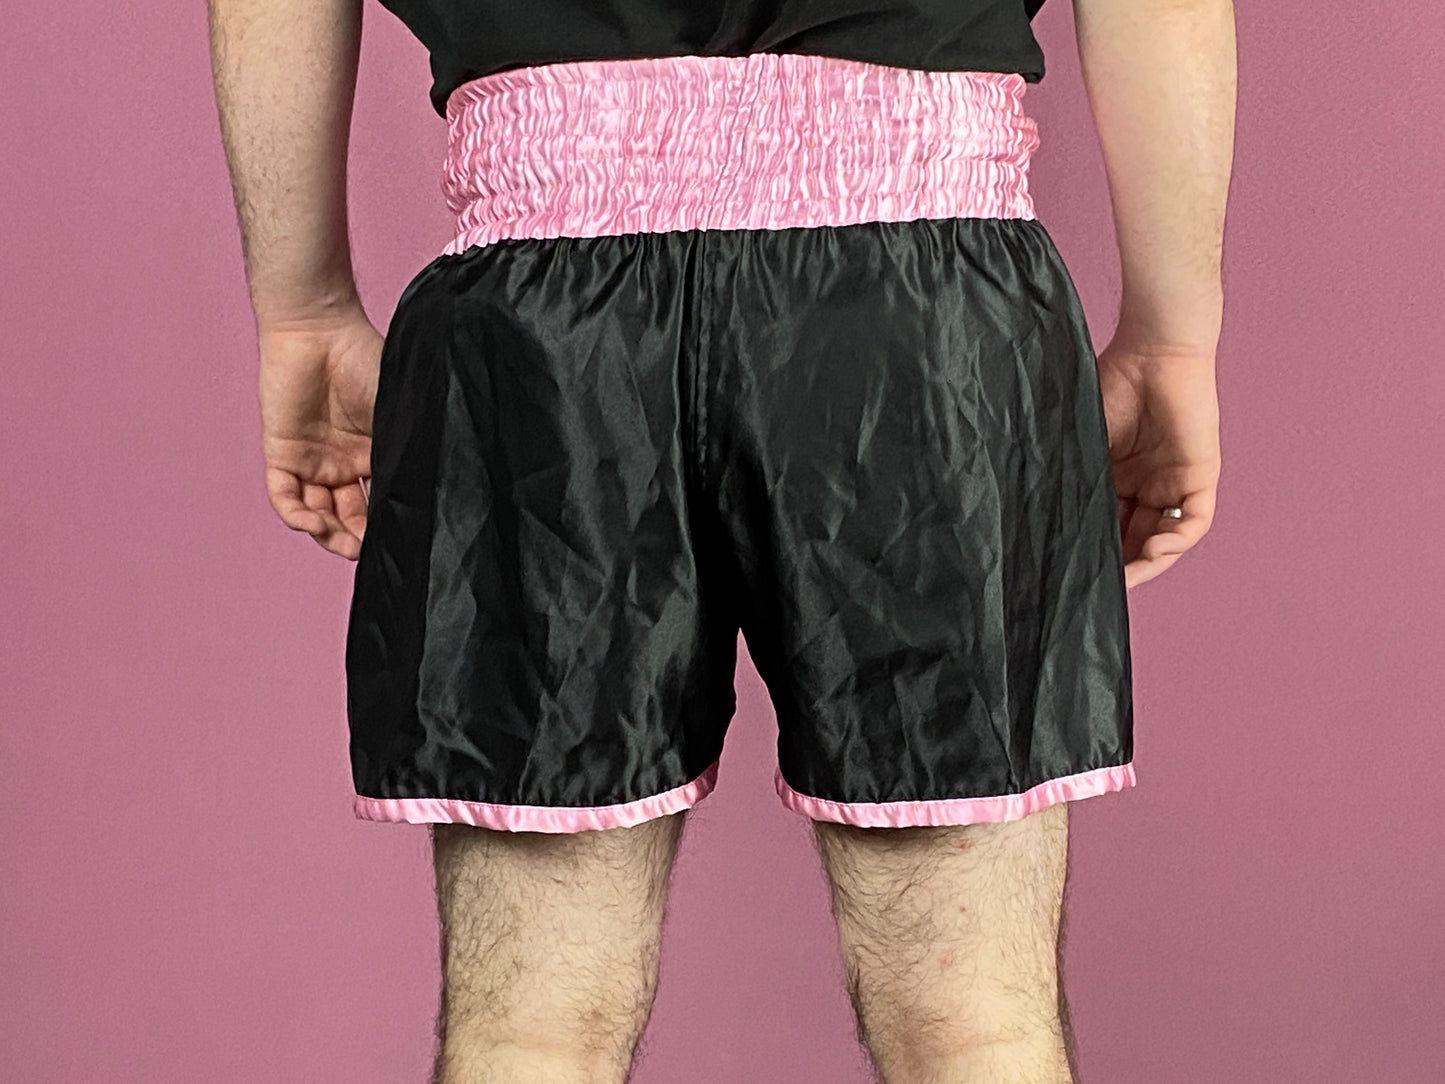 Islero Vintage Men's Muay Thai Boxing Shorts - M Black & Pink Polyester